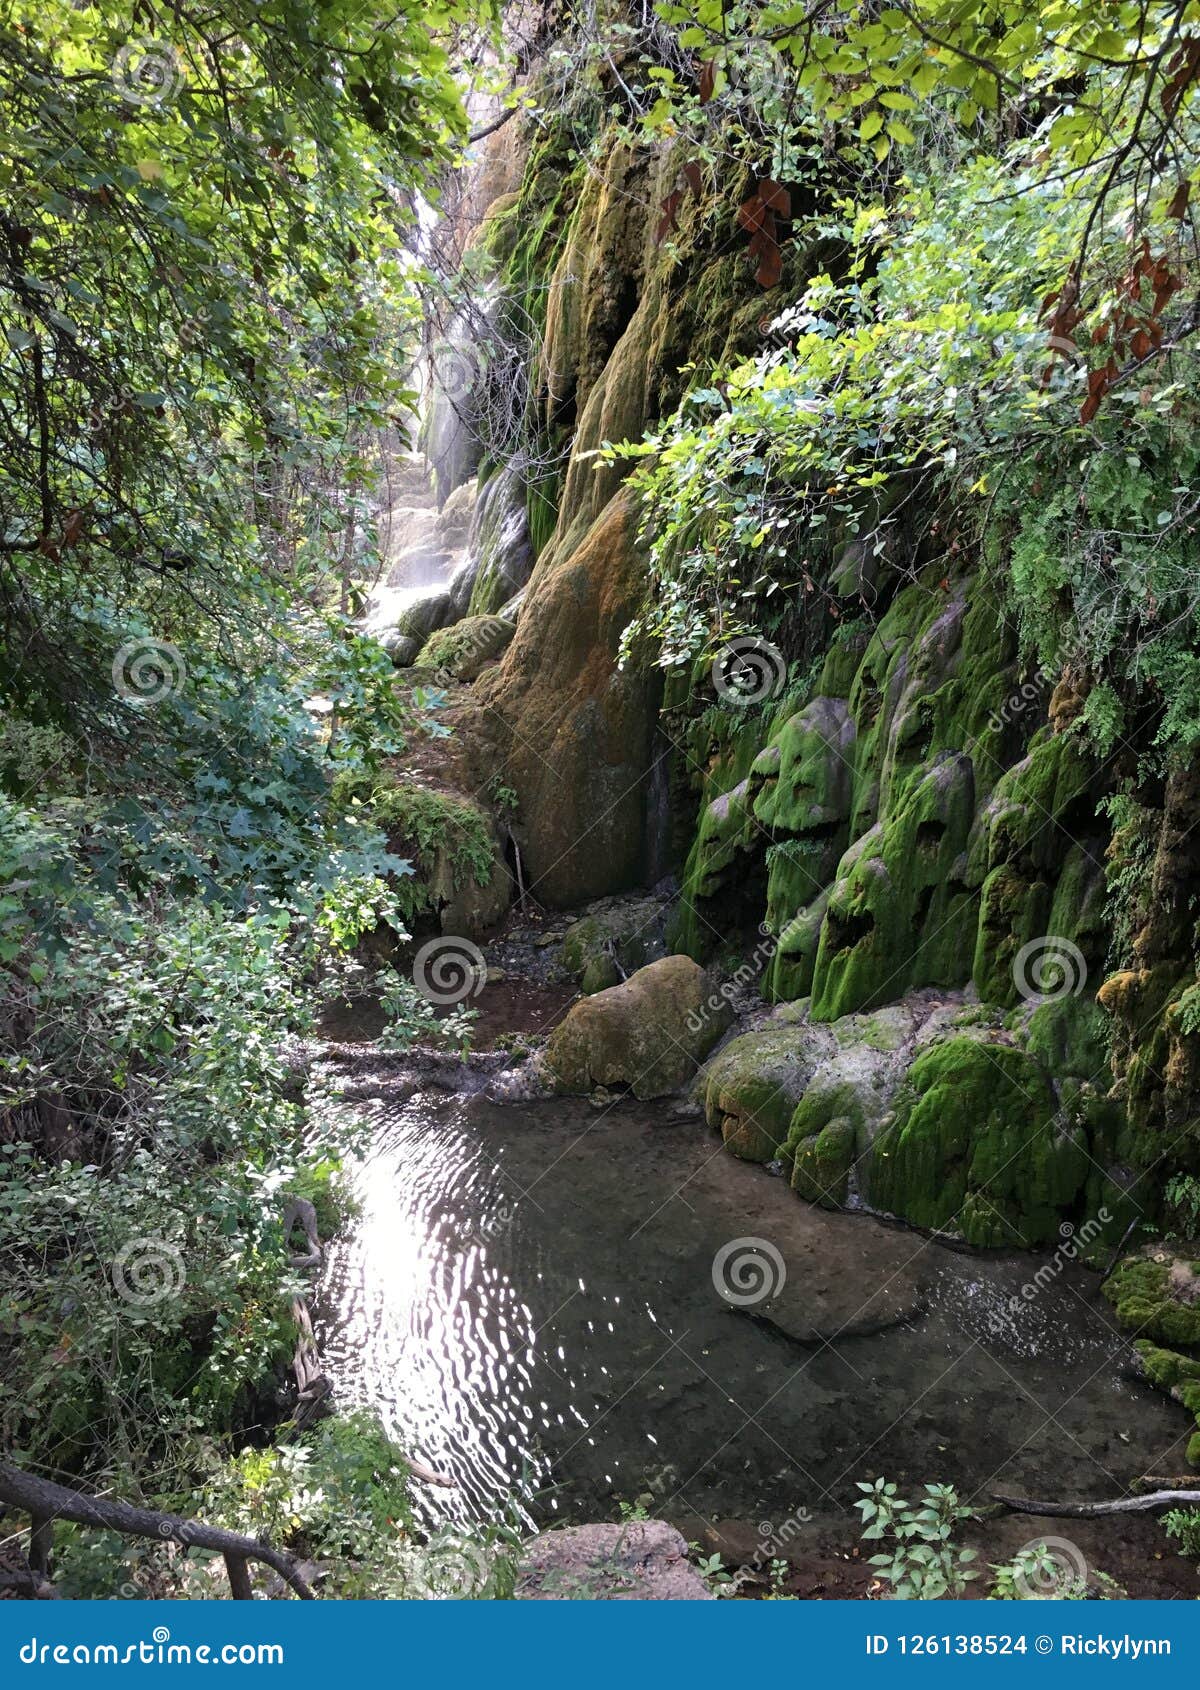 gorman falls in colorado state park 2018